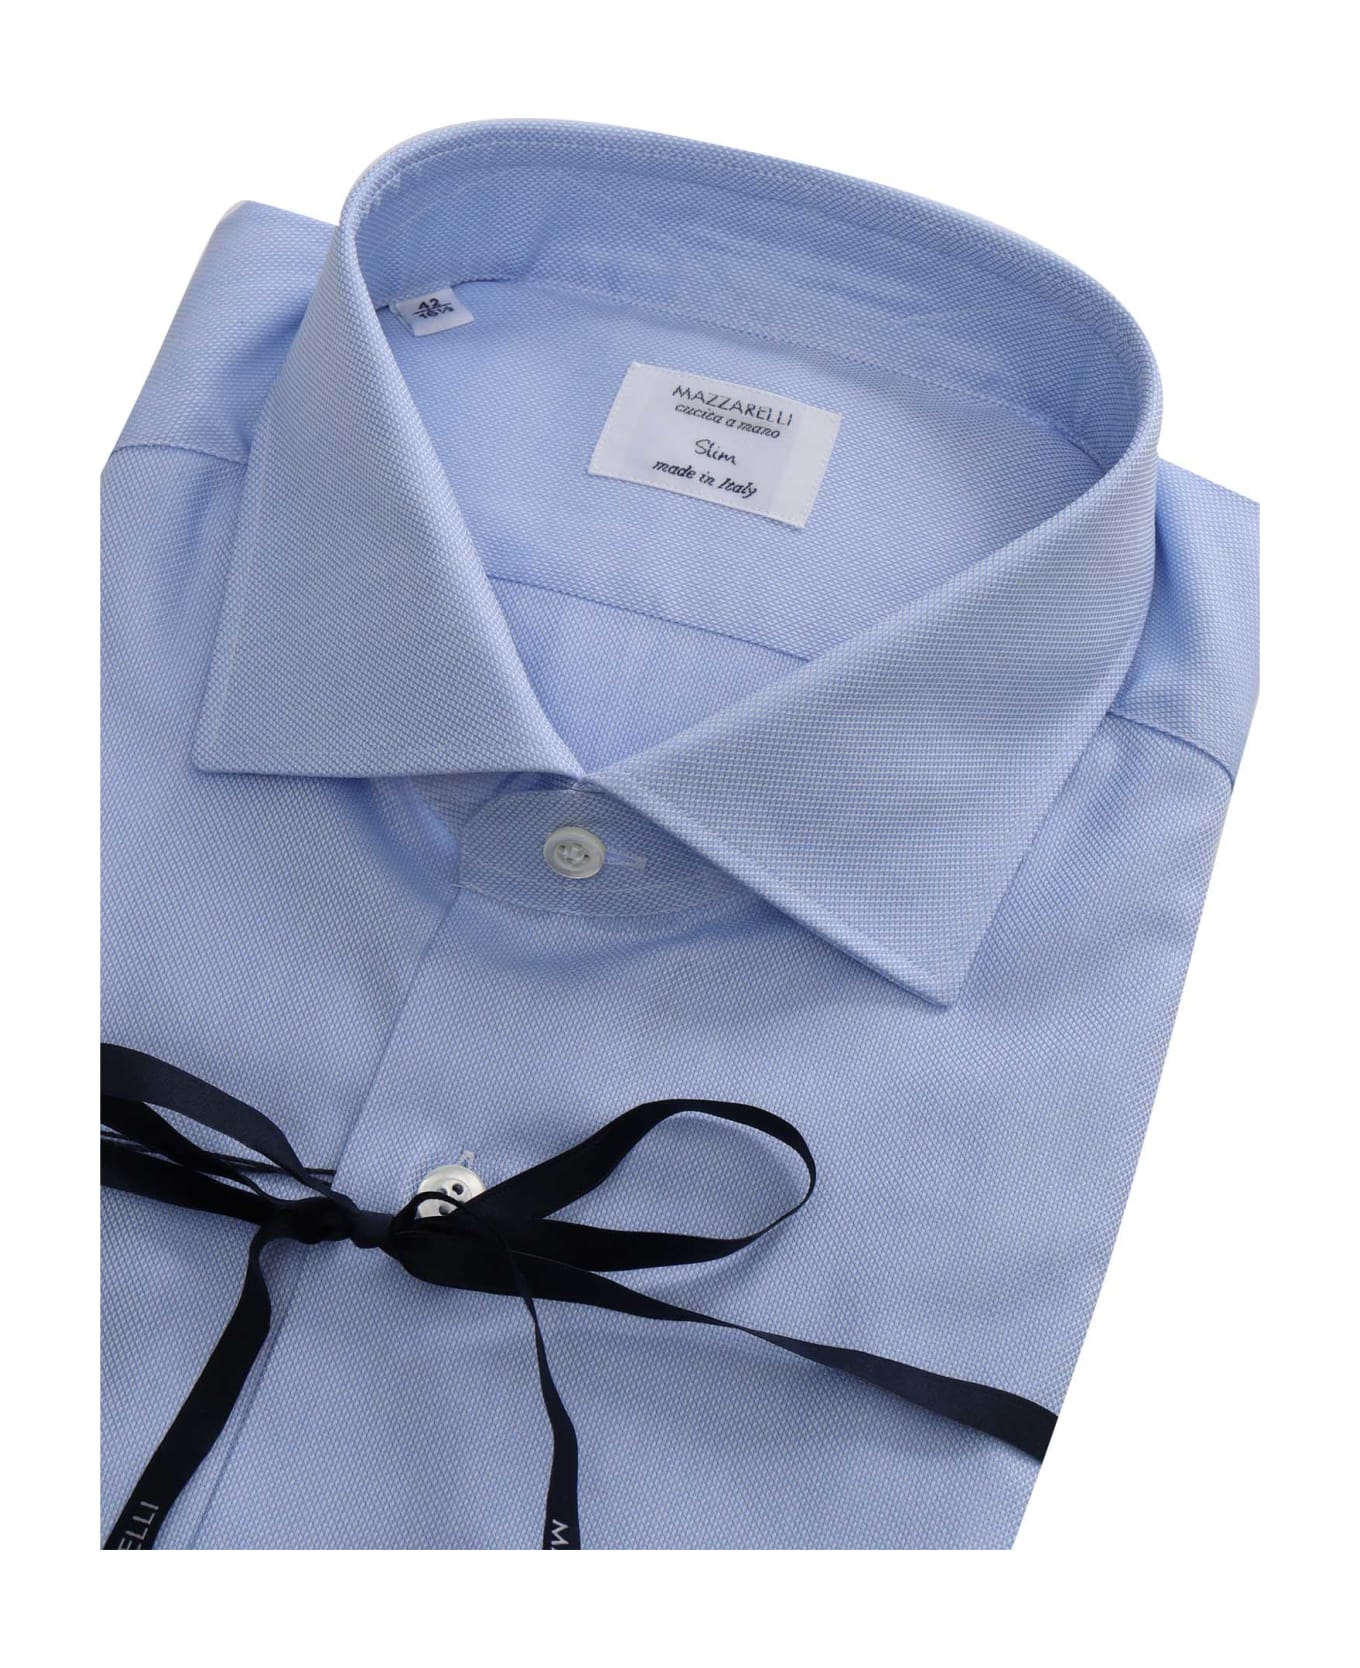 Mazzarelli Slim Fit Oxford Shirt - LIGHT BLUE